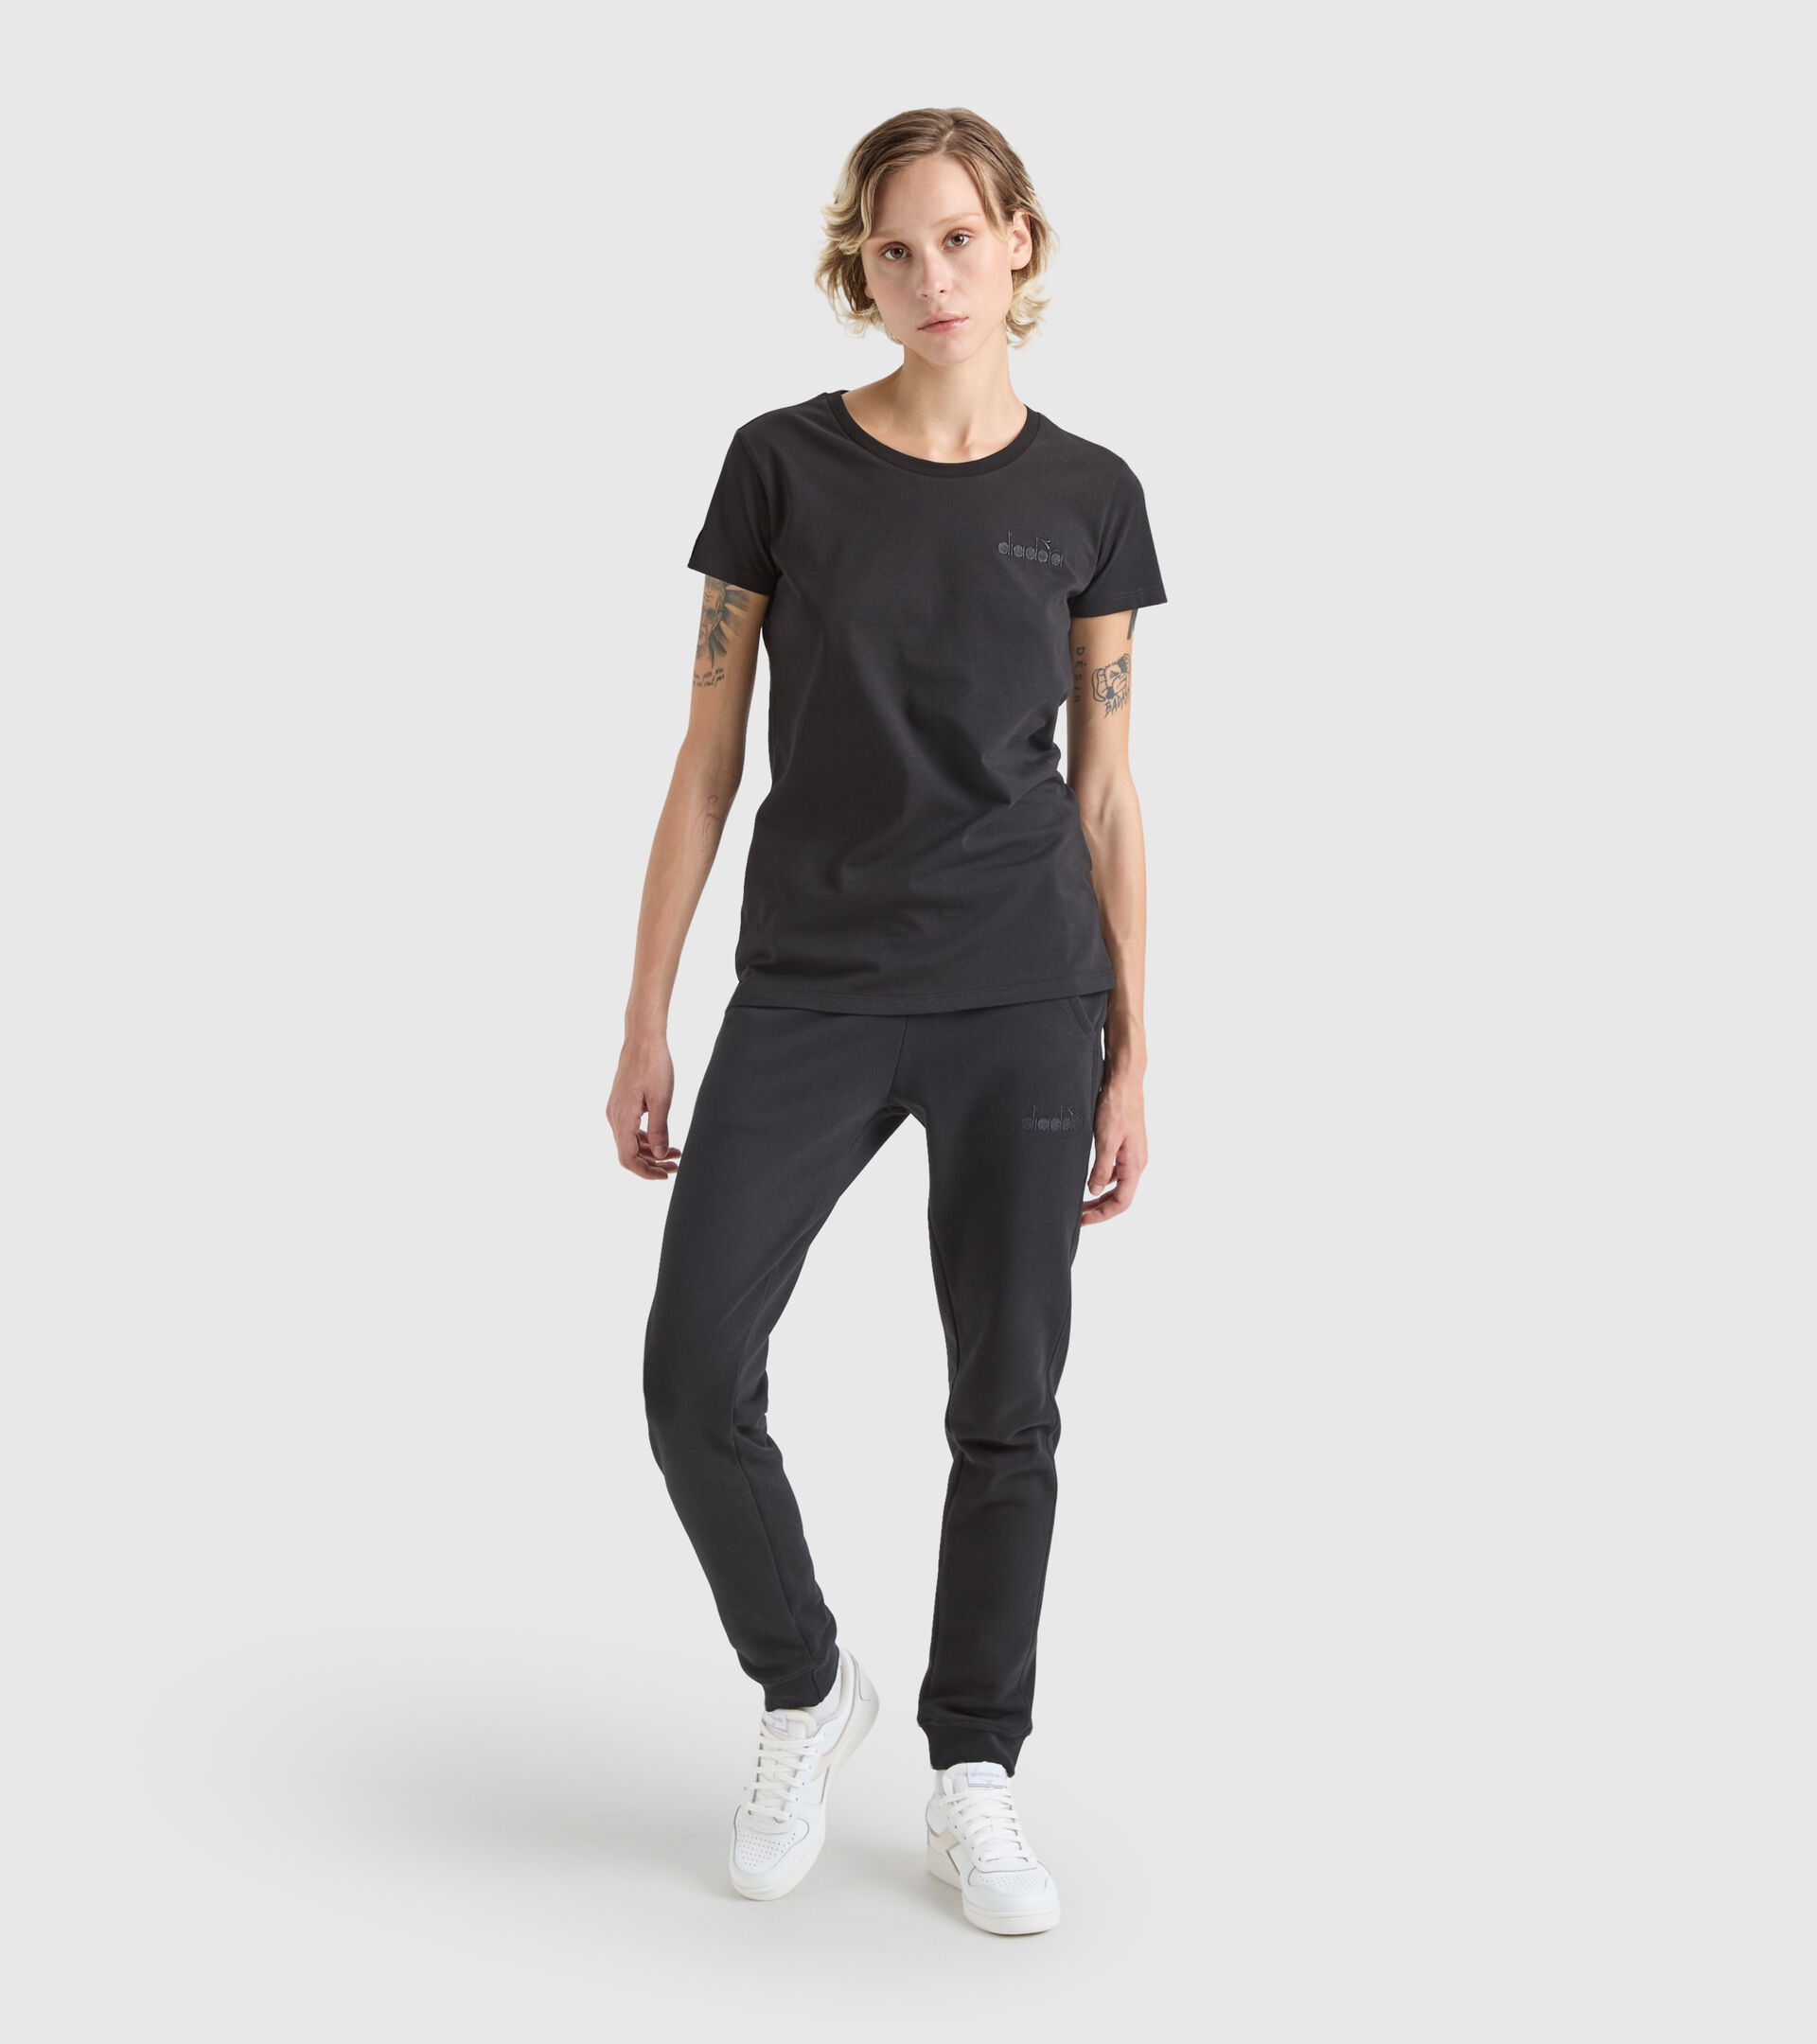 Cotton T-shirt - Made in Italy - Women L. T-SHIRT SS MII BLACK - Diadora